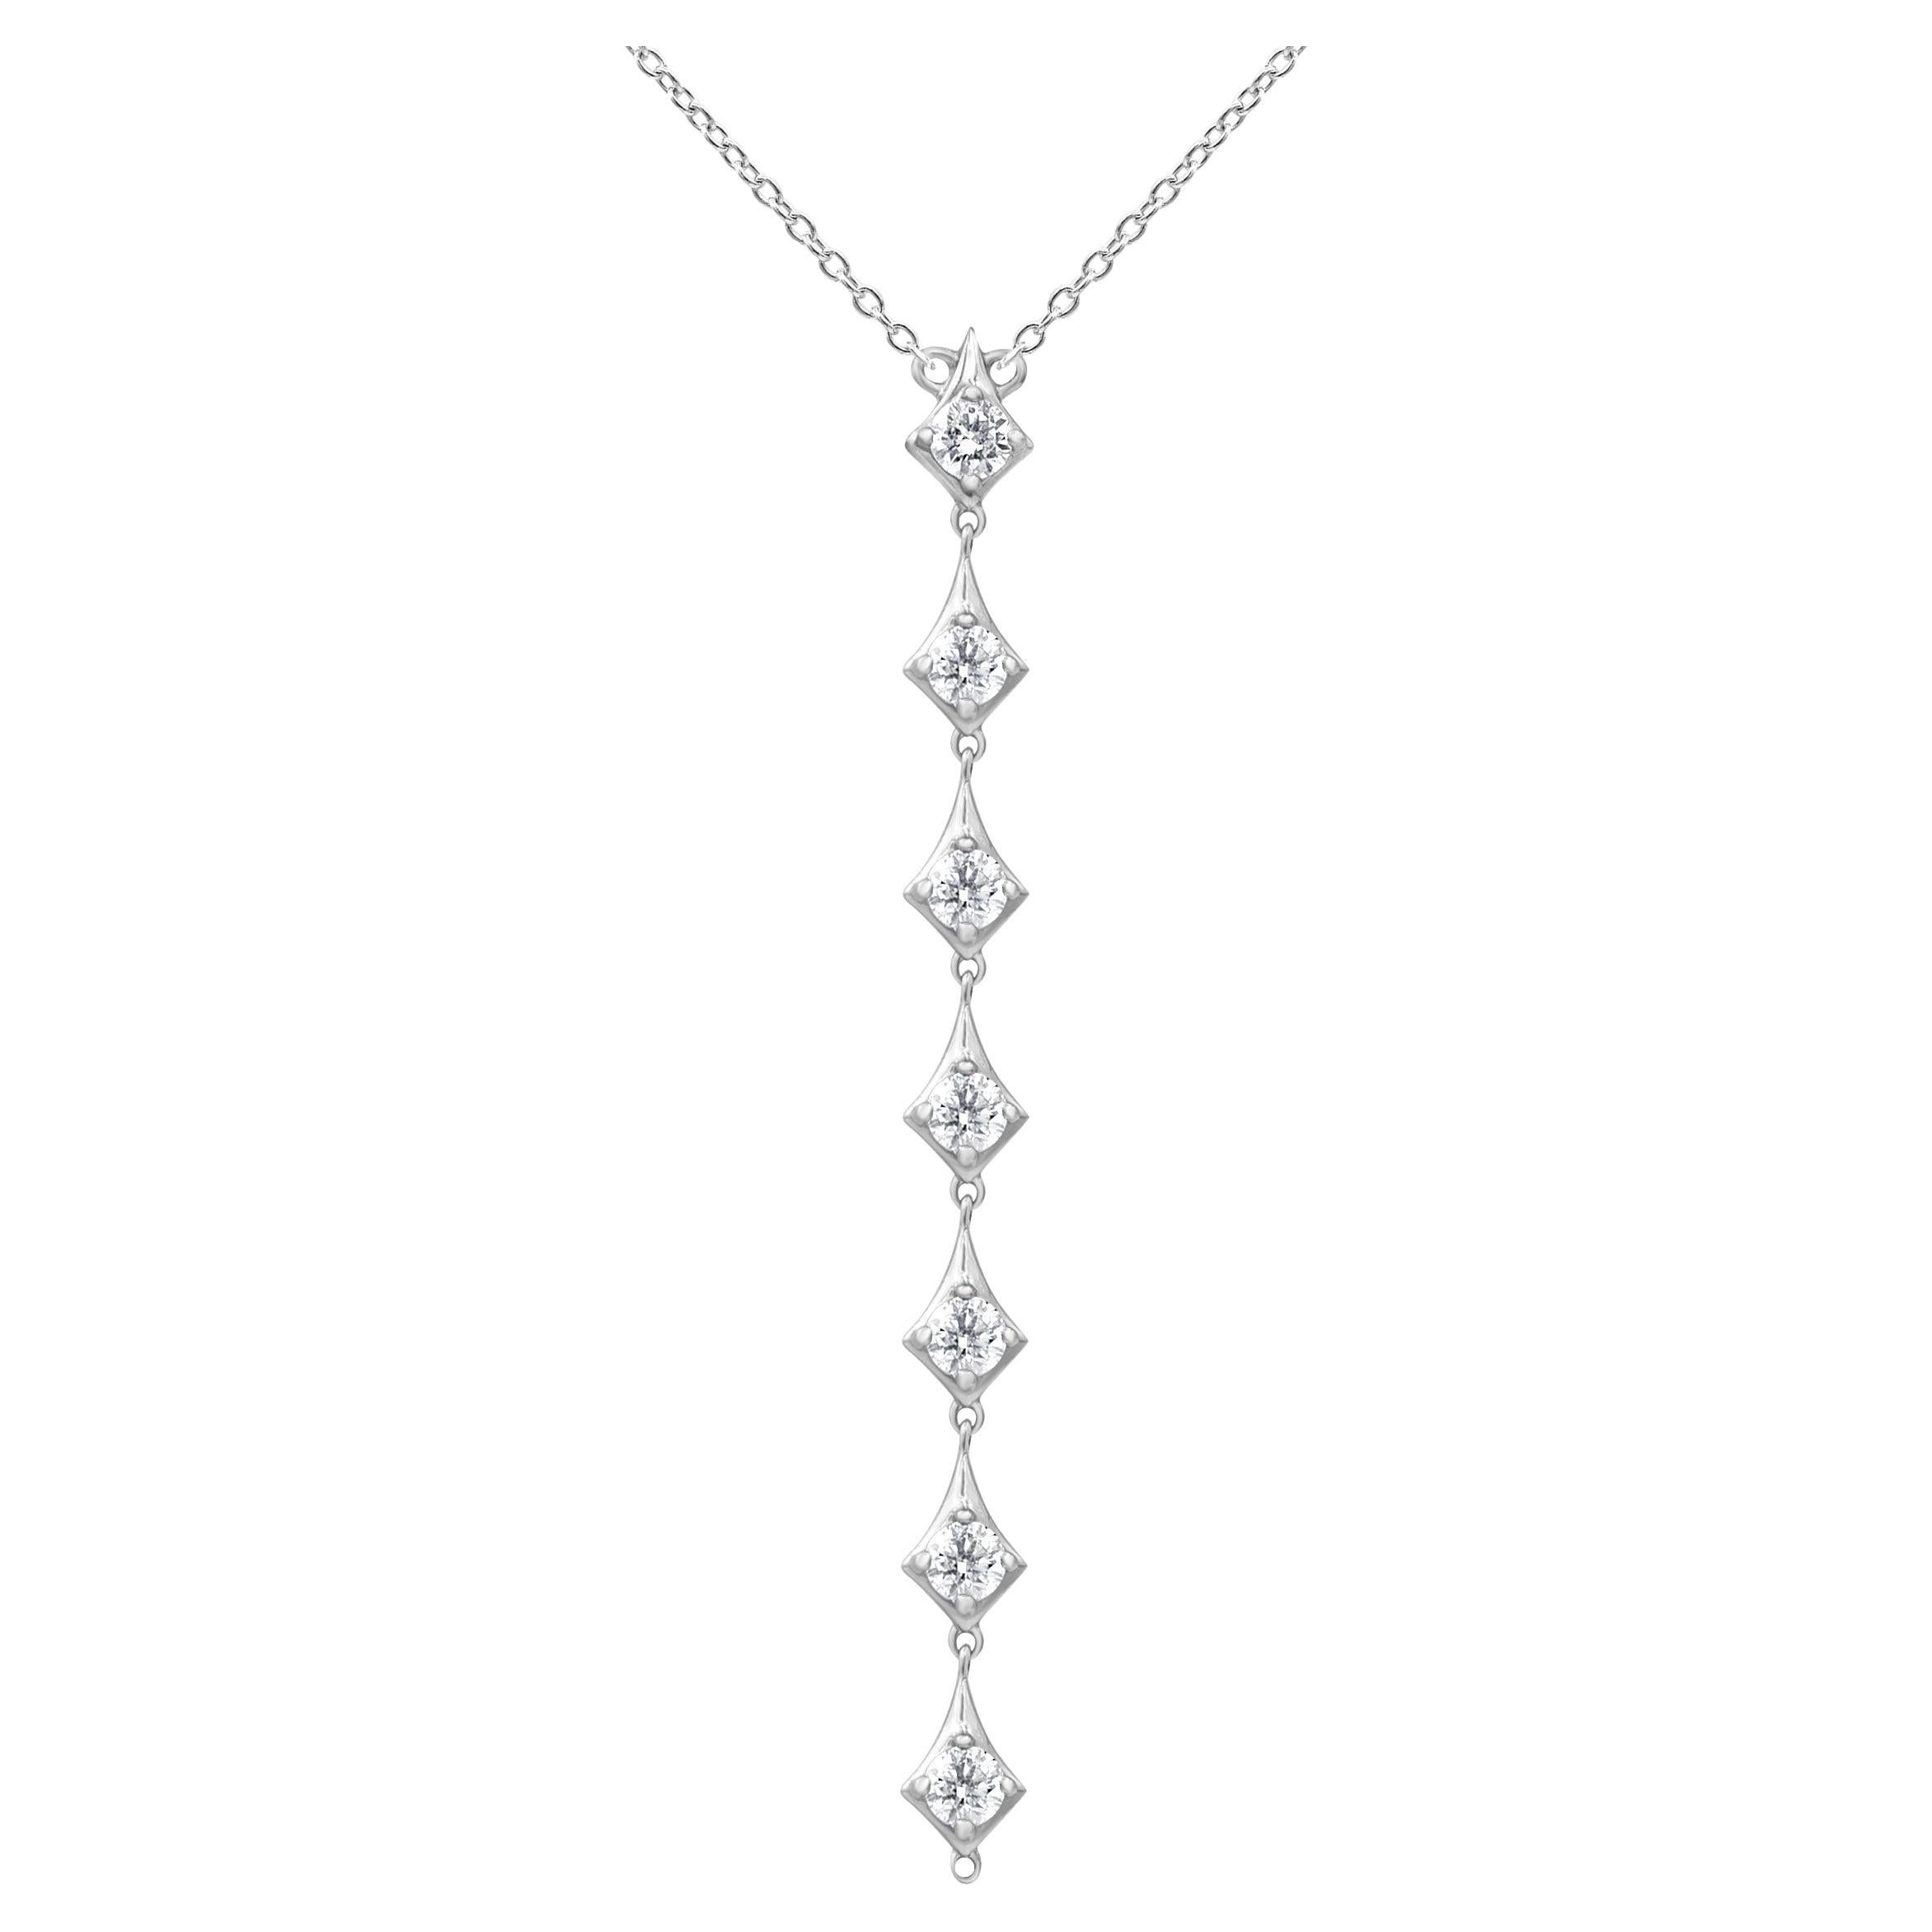 1.65 CT Diamond, 14K White Gold Prong Set Pendant Necklace